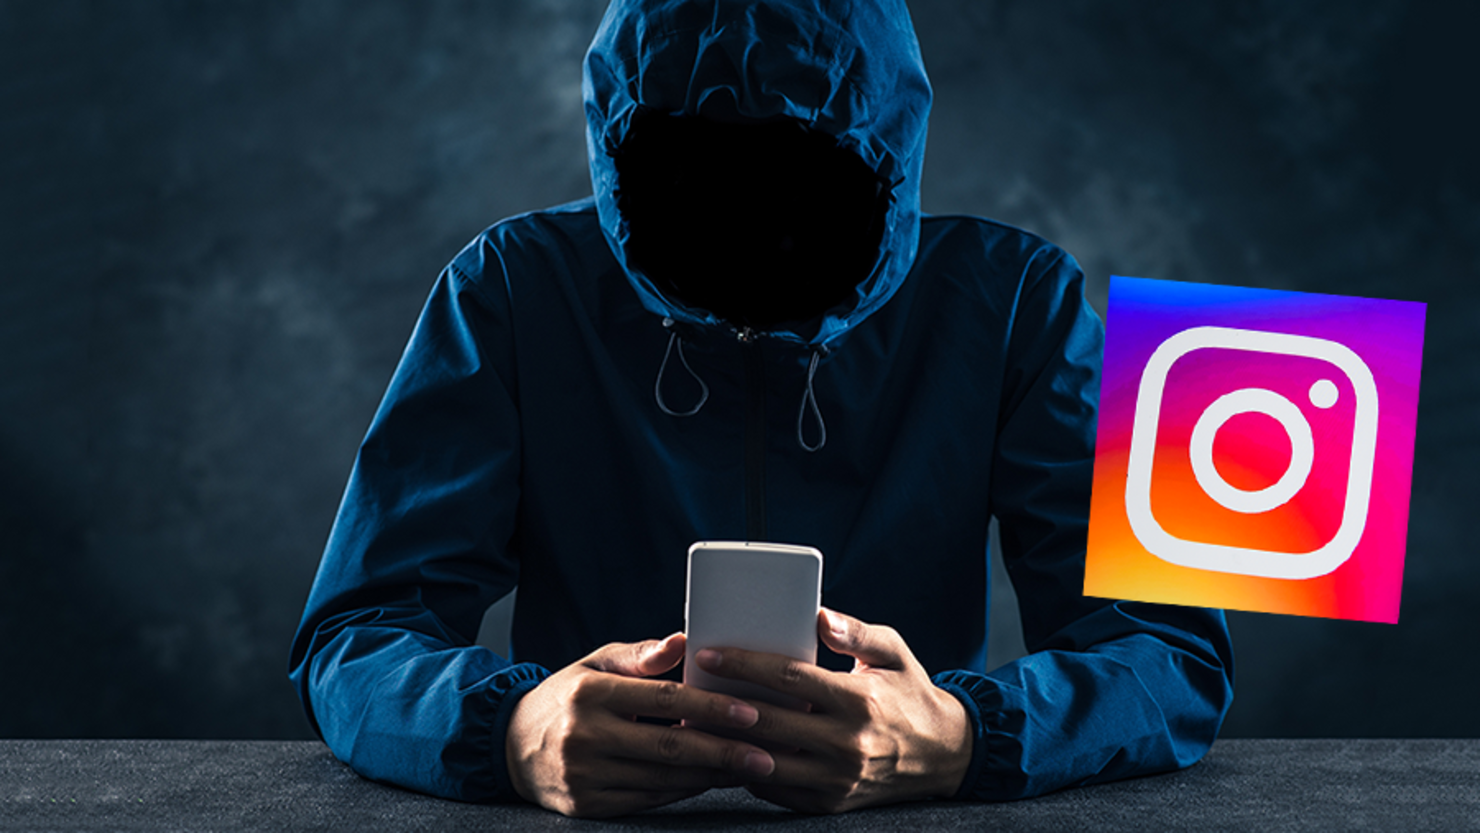 Choose options like InstaPwn Instagram hack system